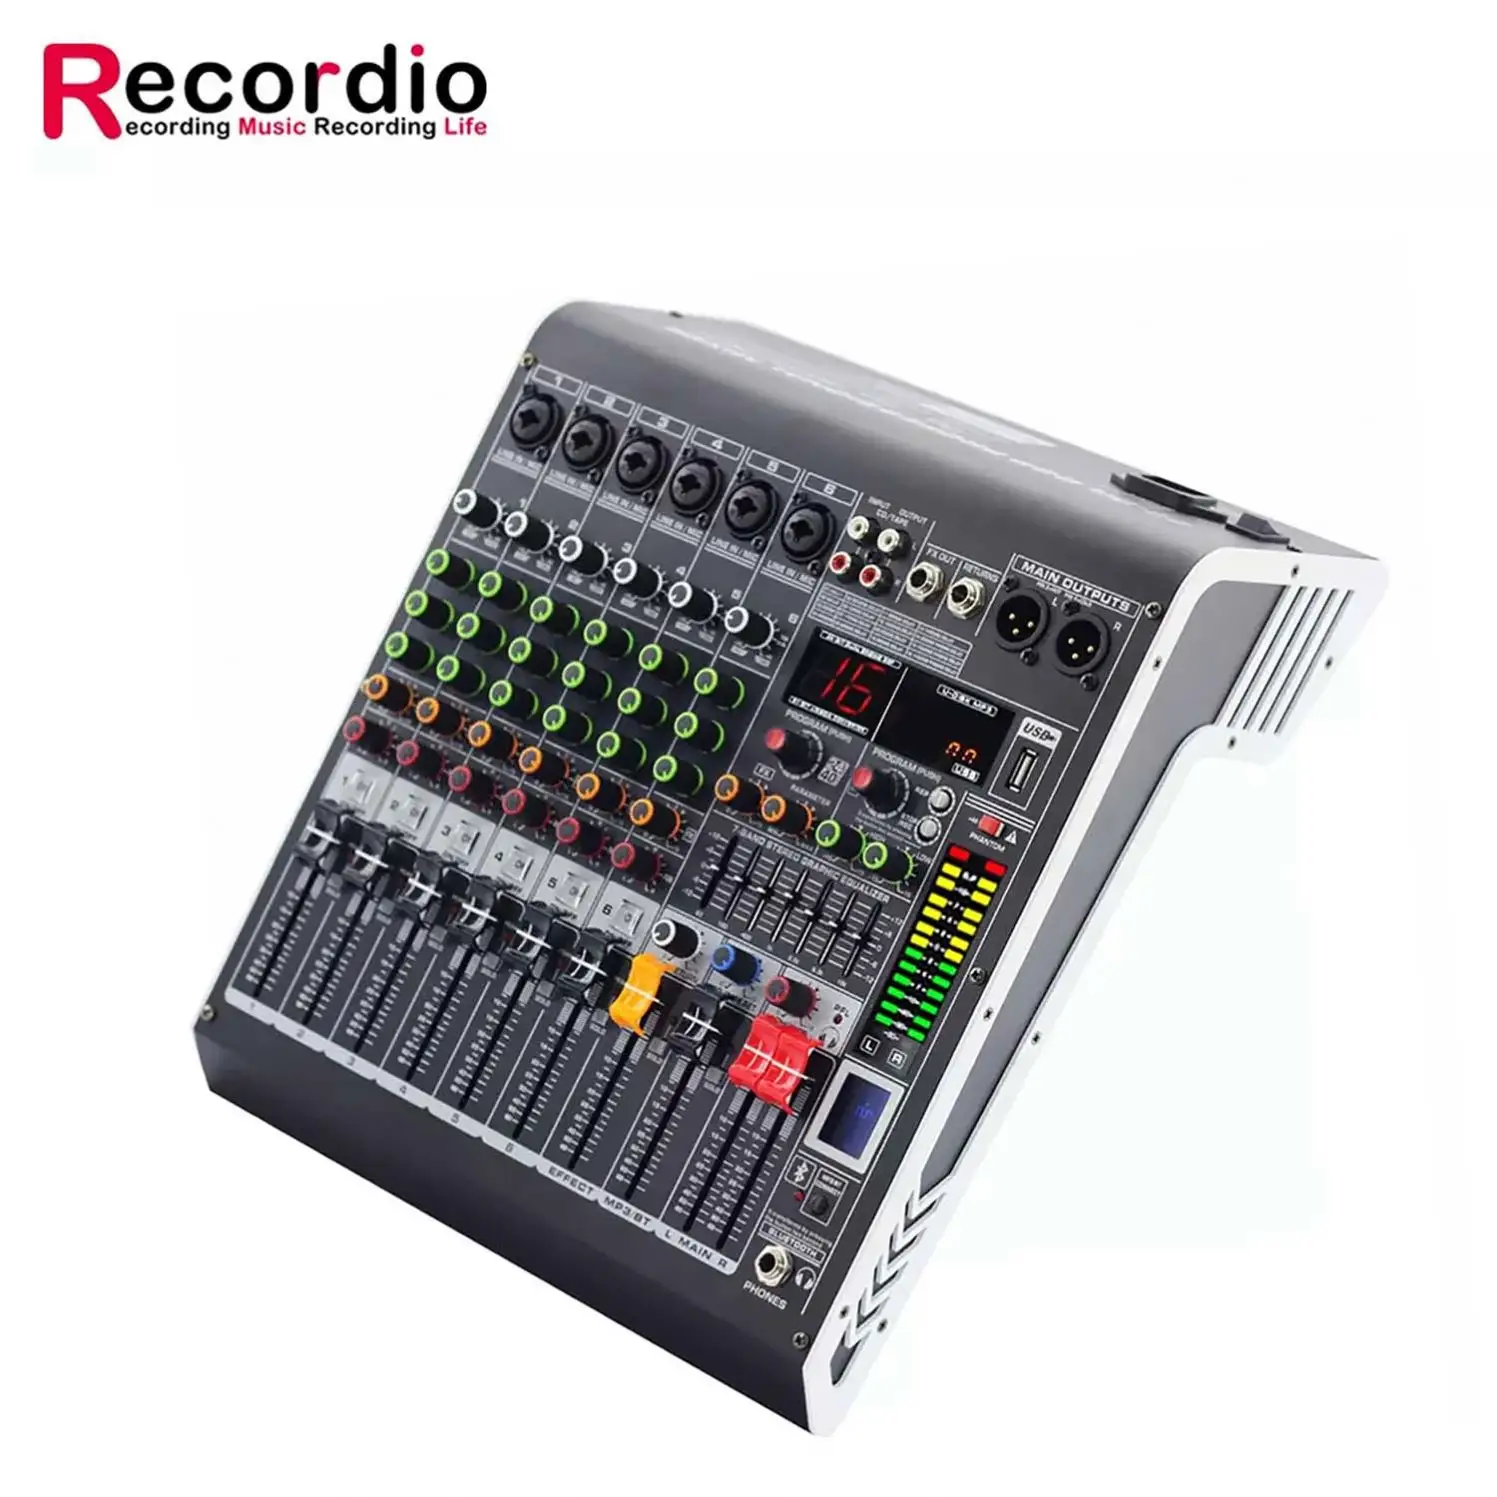 Console de mixer digital multifuncional, áudio profissional para dj club GAX-MC6